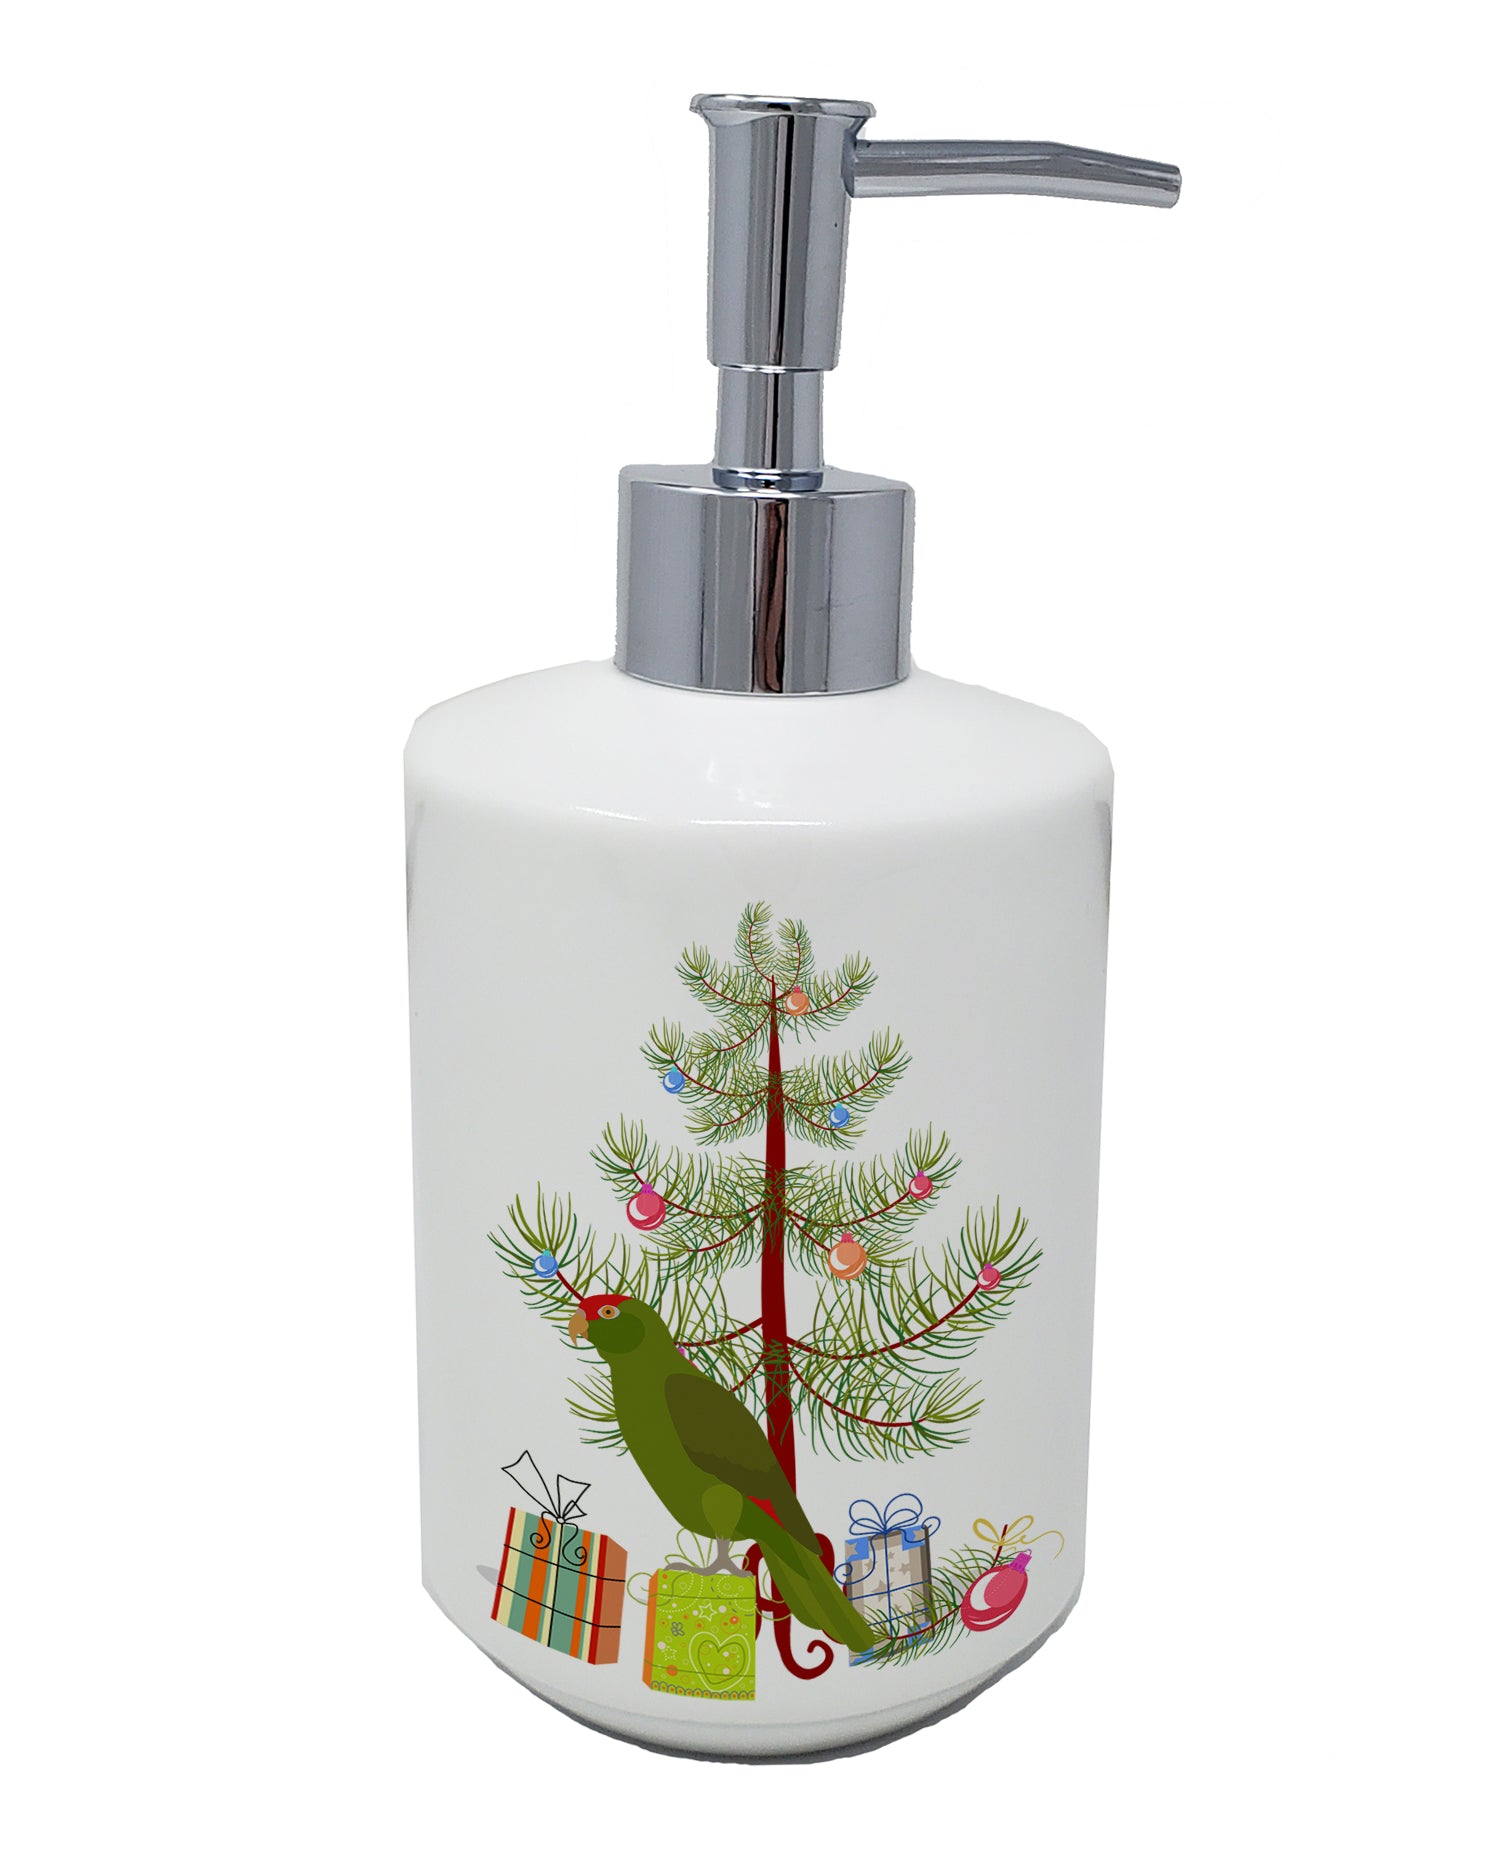 Buy this Amazon Parrot Merry Christmas Ceramic Soap Dispenser